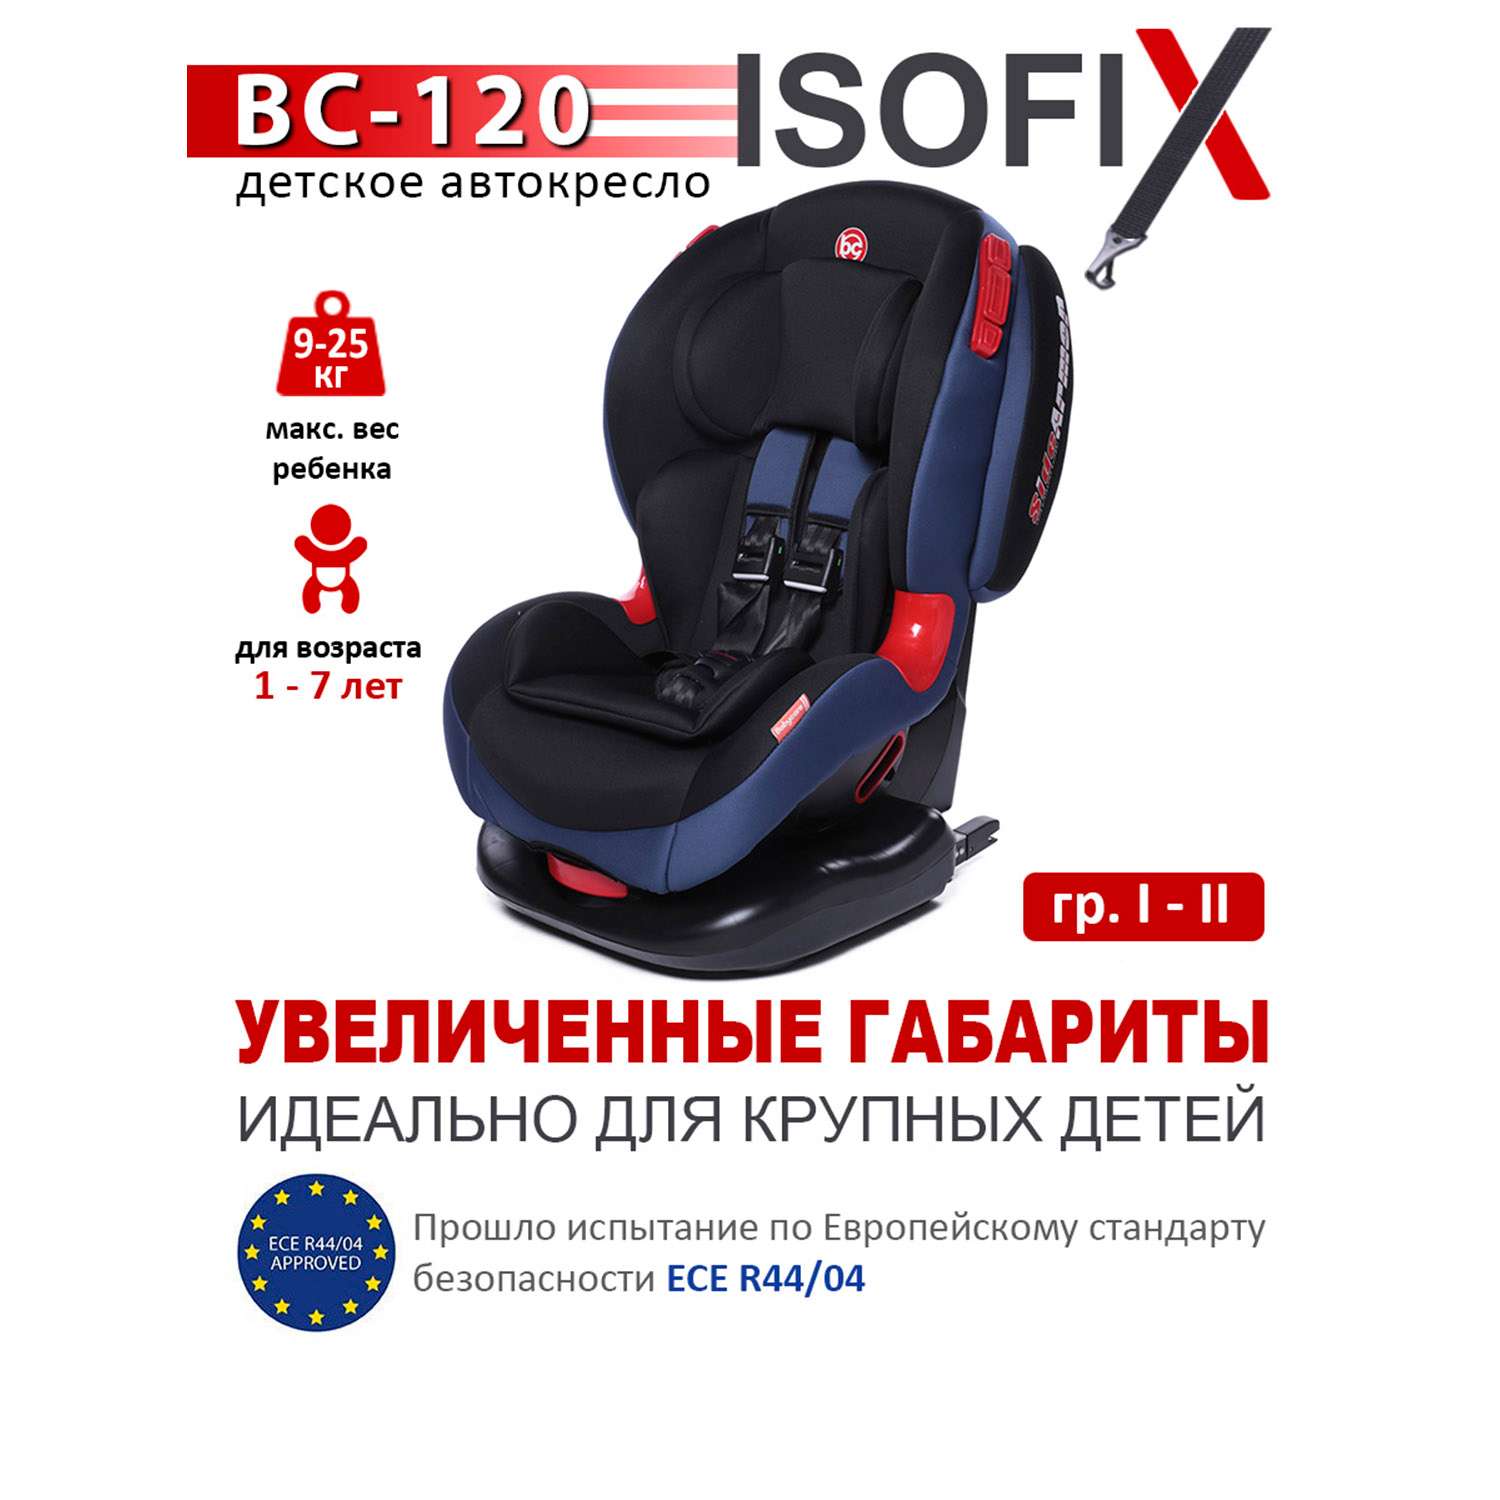 Автокресло BabyCare ВC-120 lsofix синий - фото 2